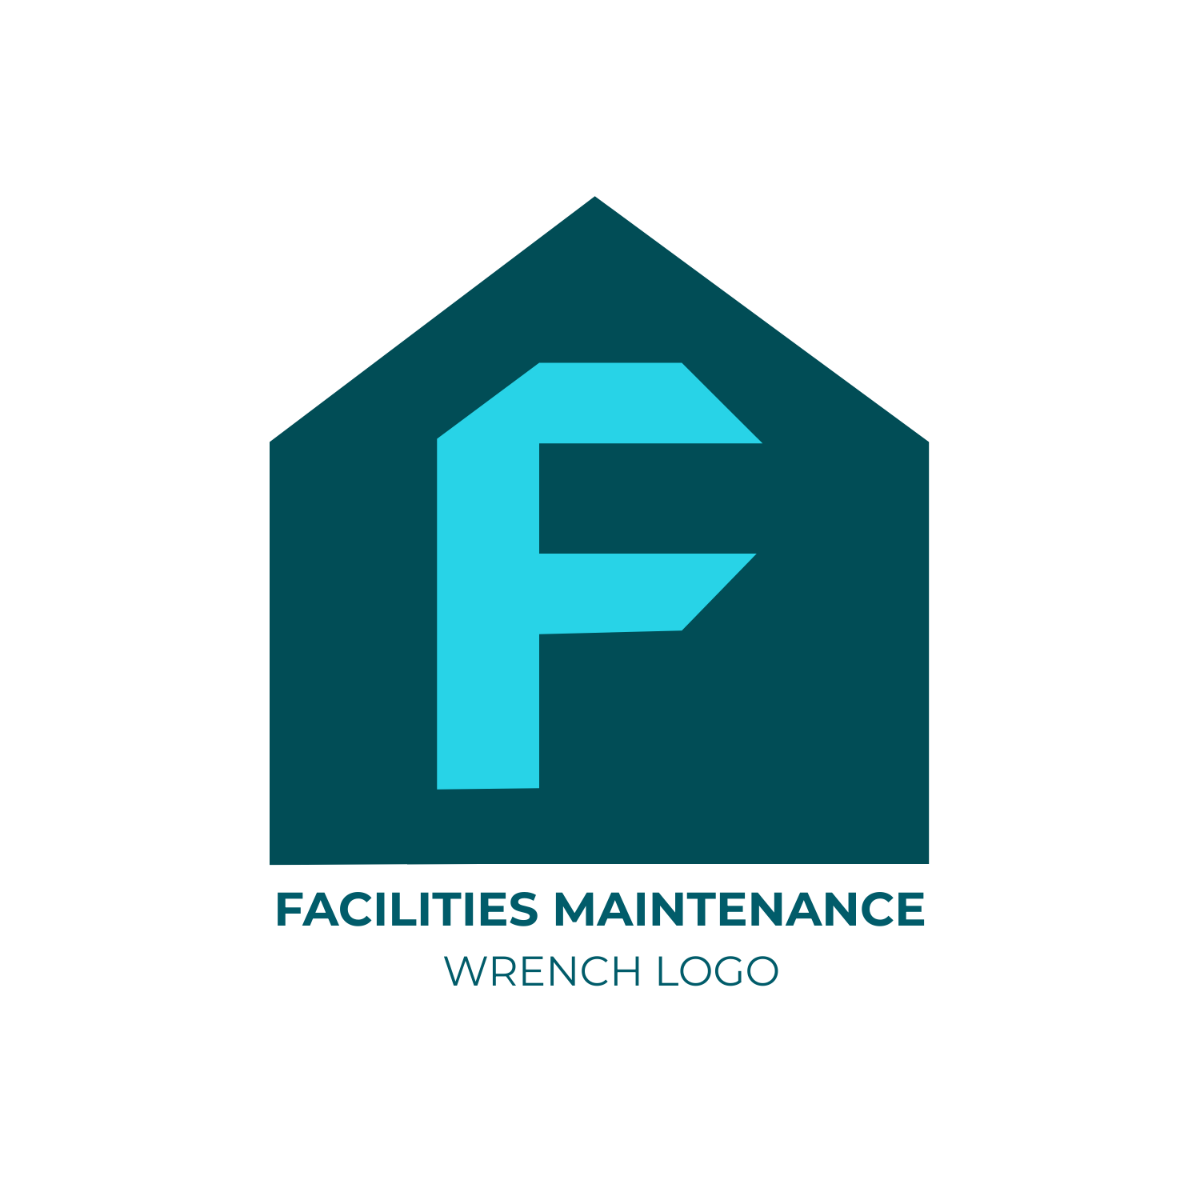 Facilities Maintenance Wrench Logo Template